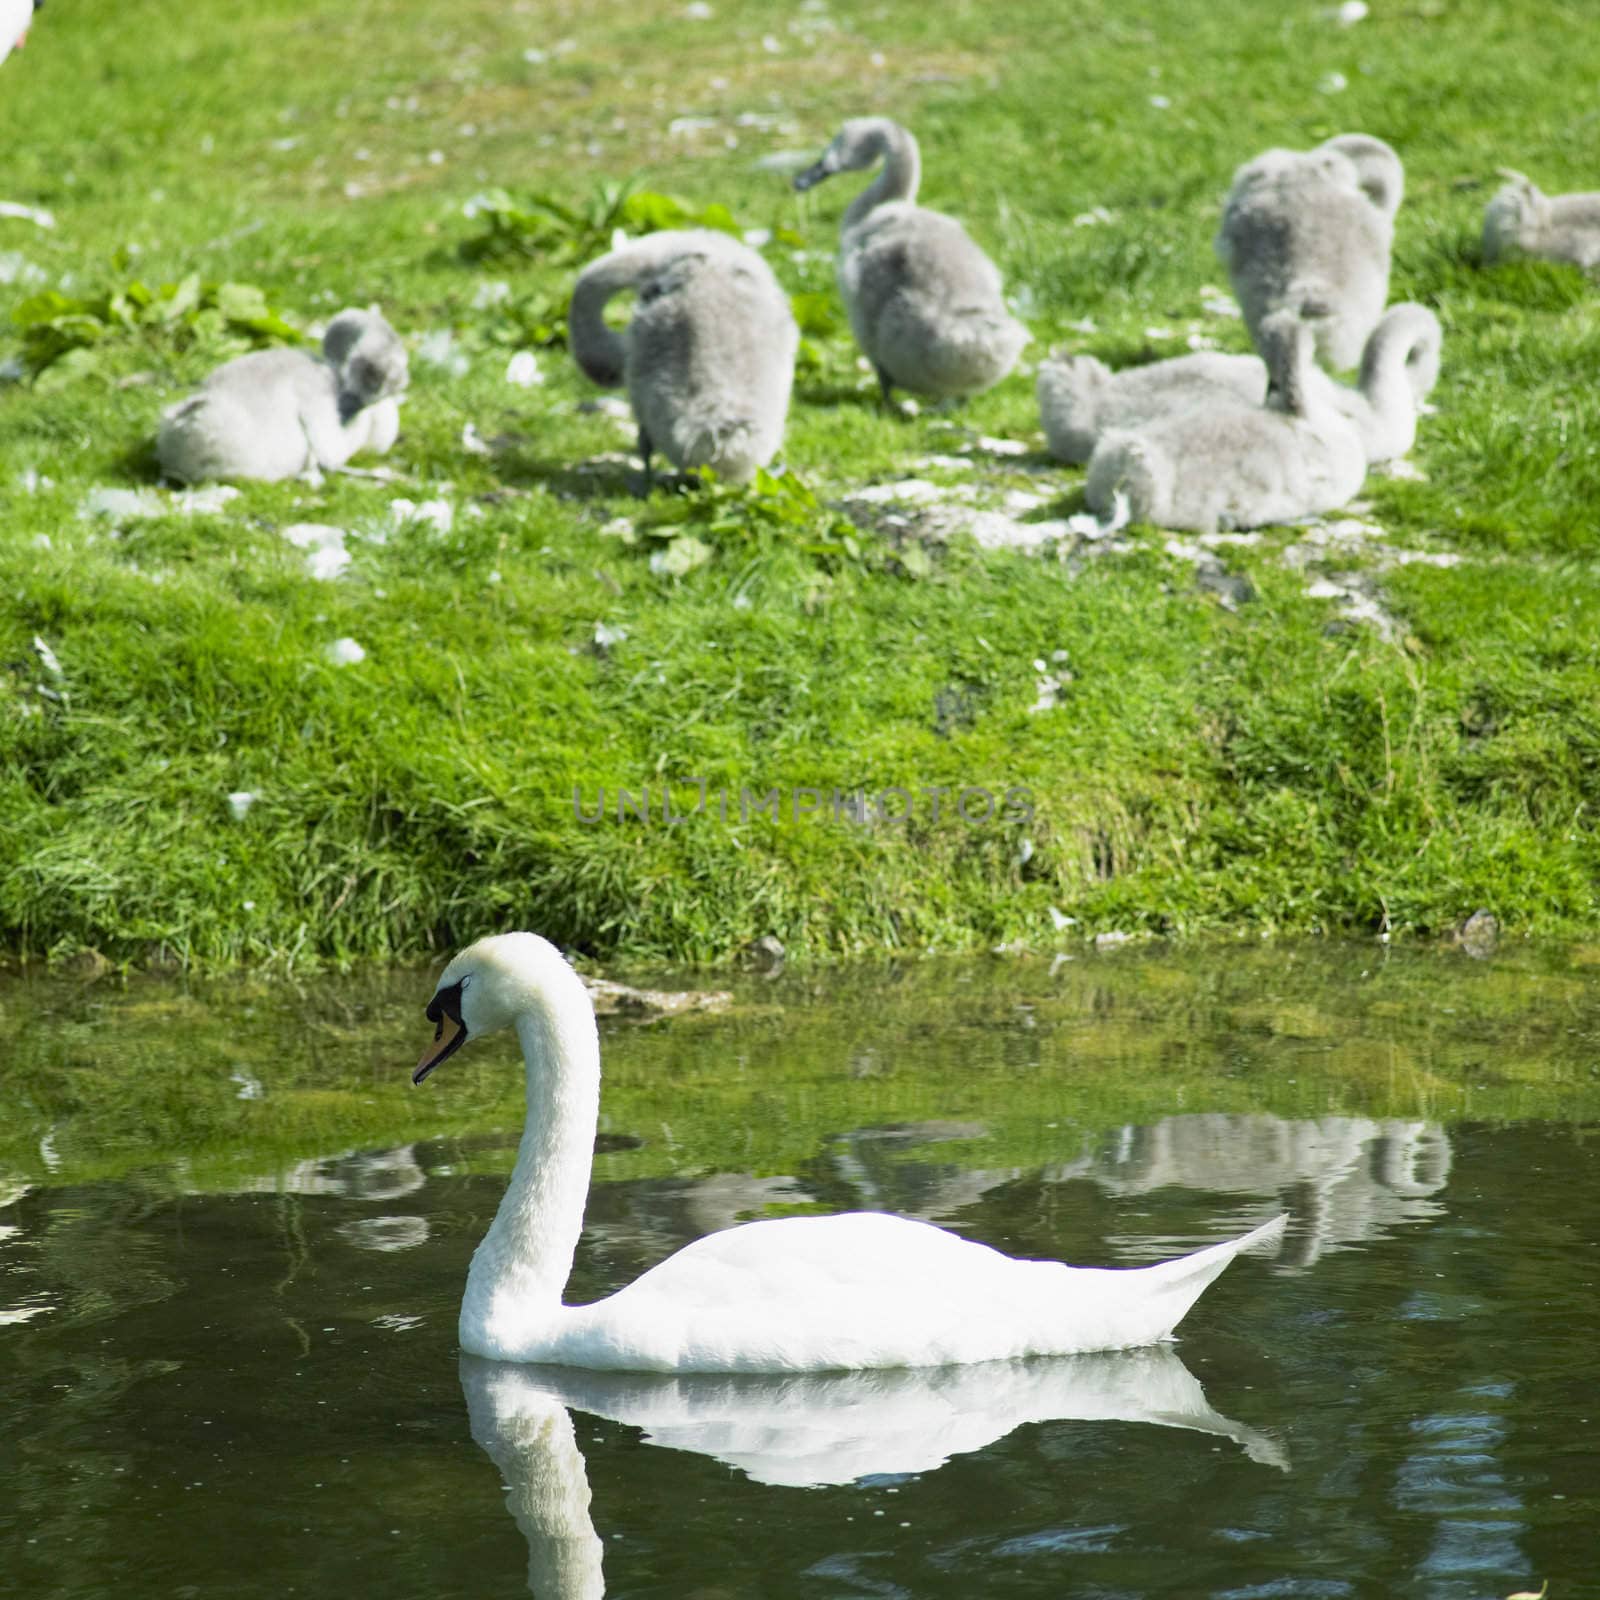 swans, Tully, County Kildare, Ireland by phbcz